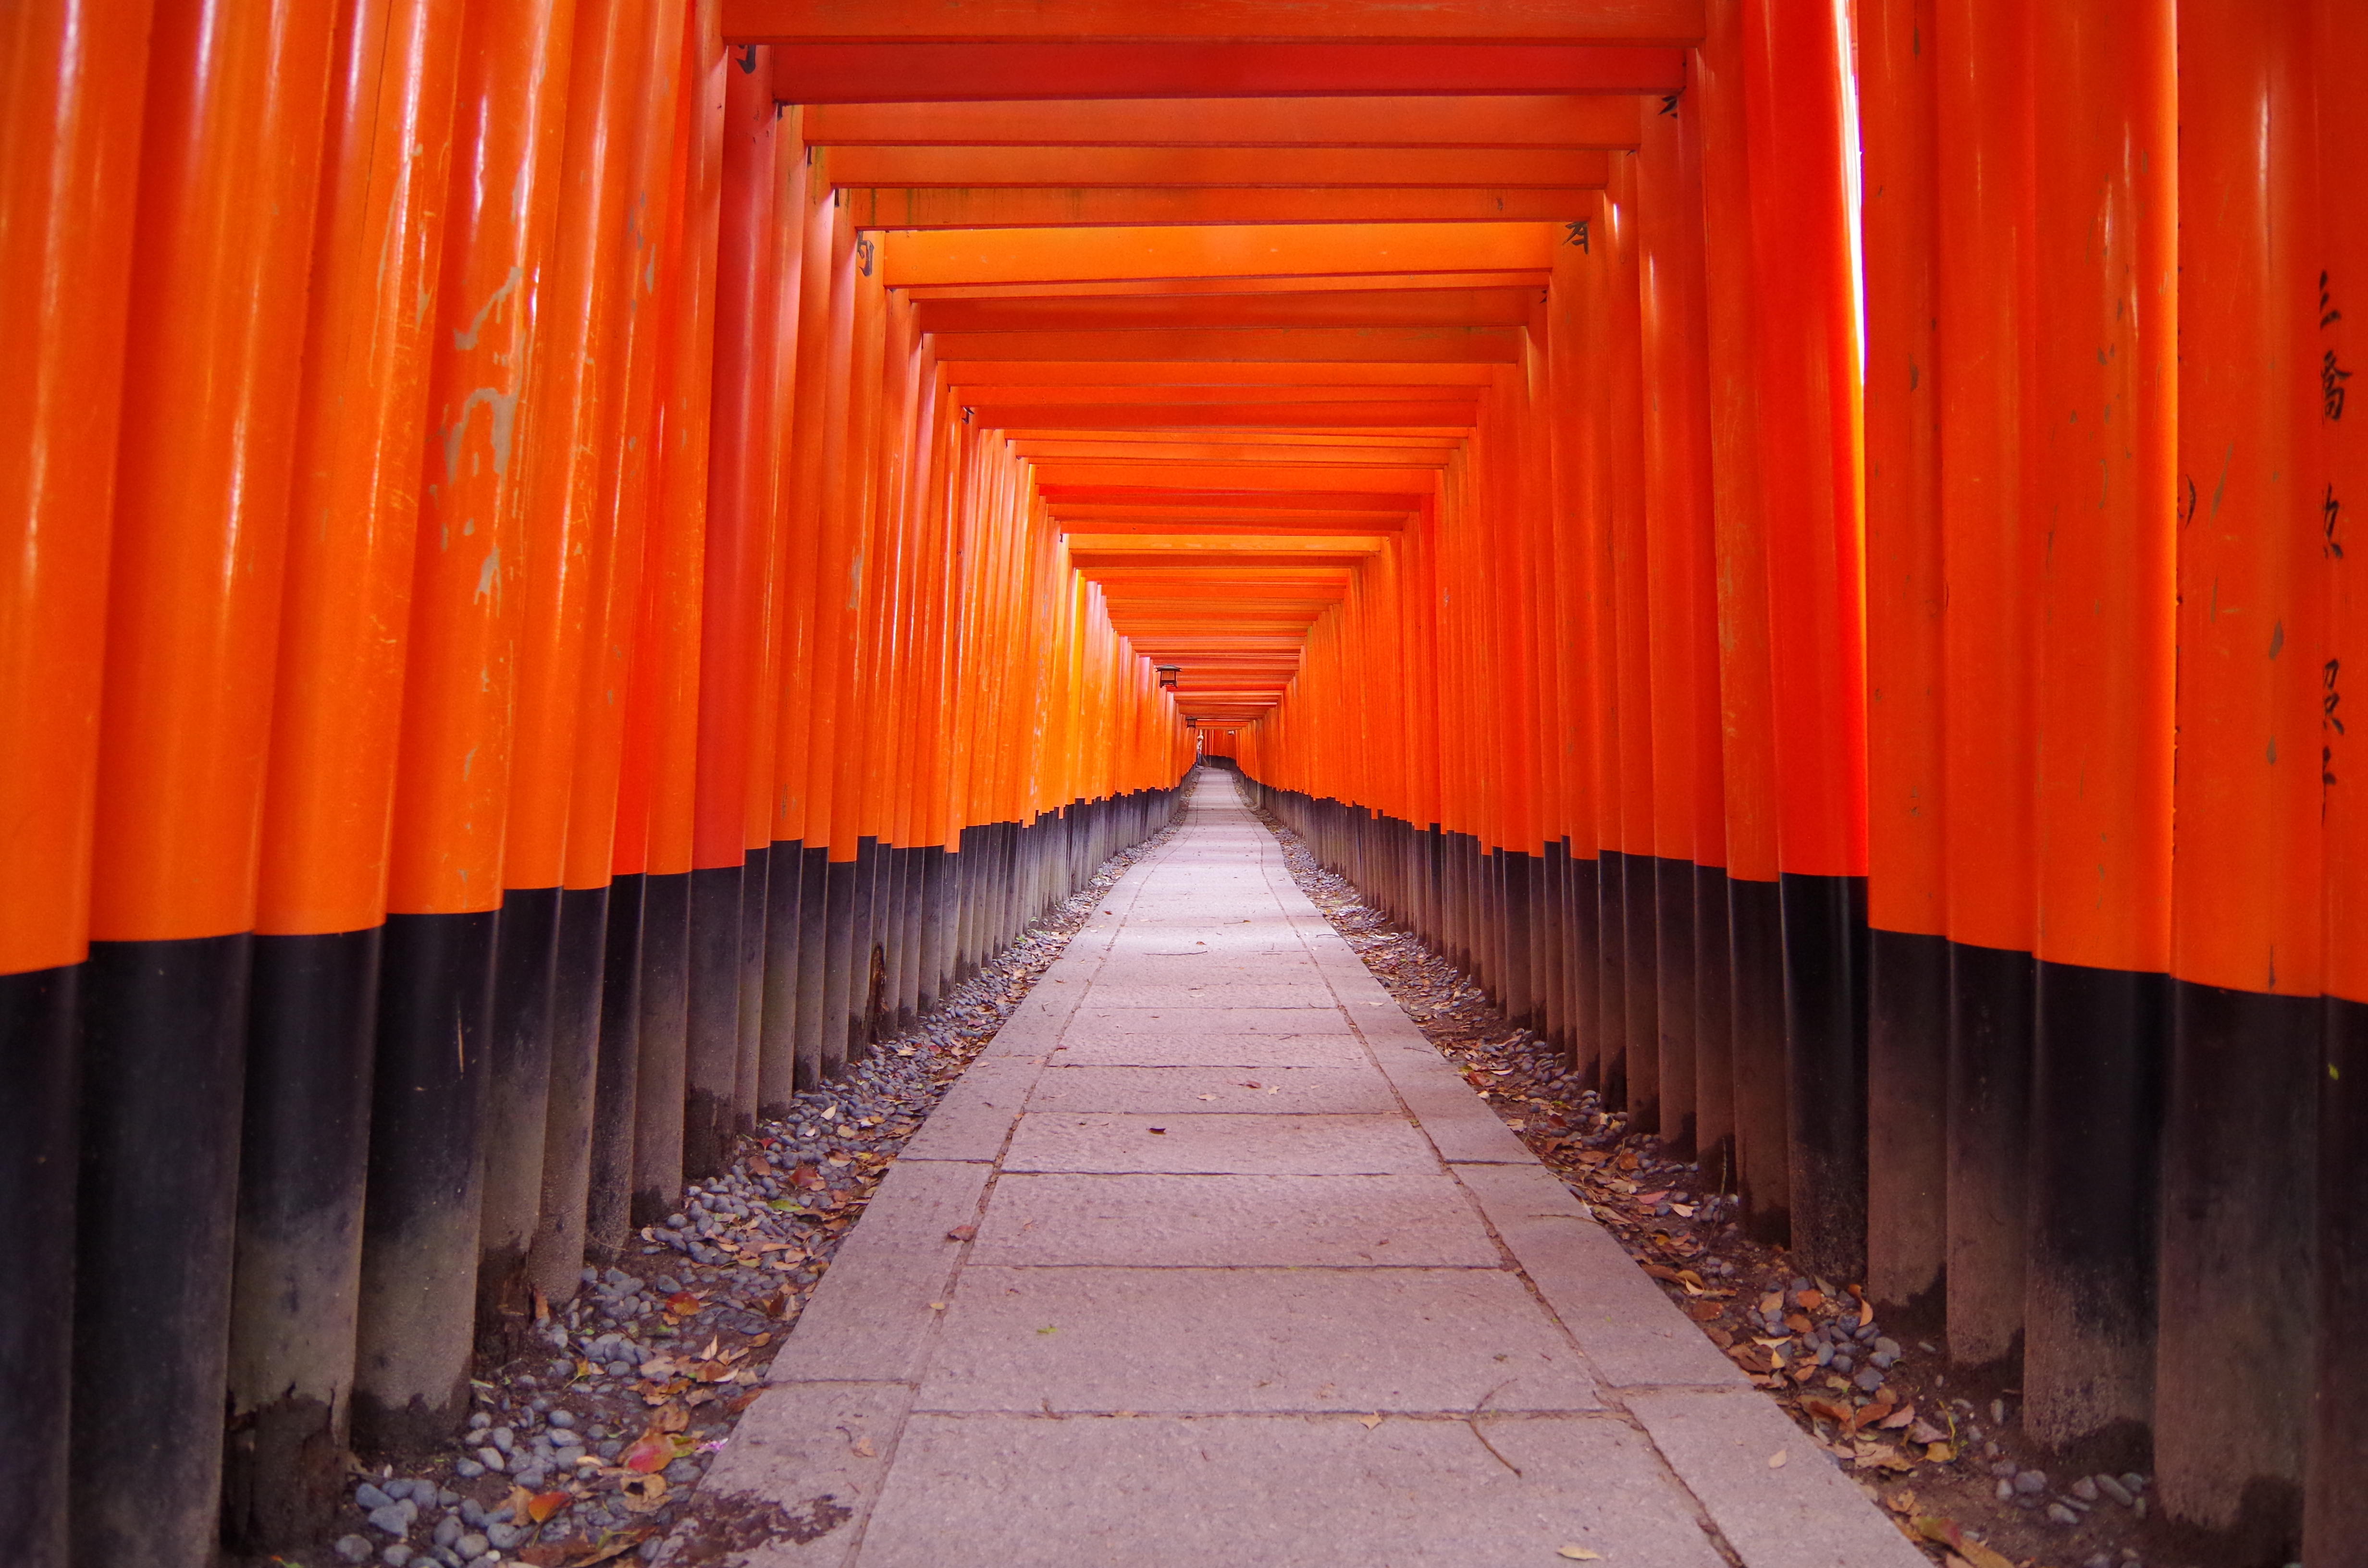 1 Day Sightseeing Tour At Kyoto Senbon Torii Of Fushimi Inari Shrine Gion Kiyomizu Sannenzaka Things To Do In Nagoya Japan Hisgo U S A